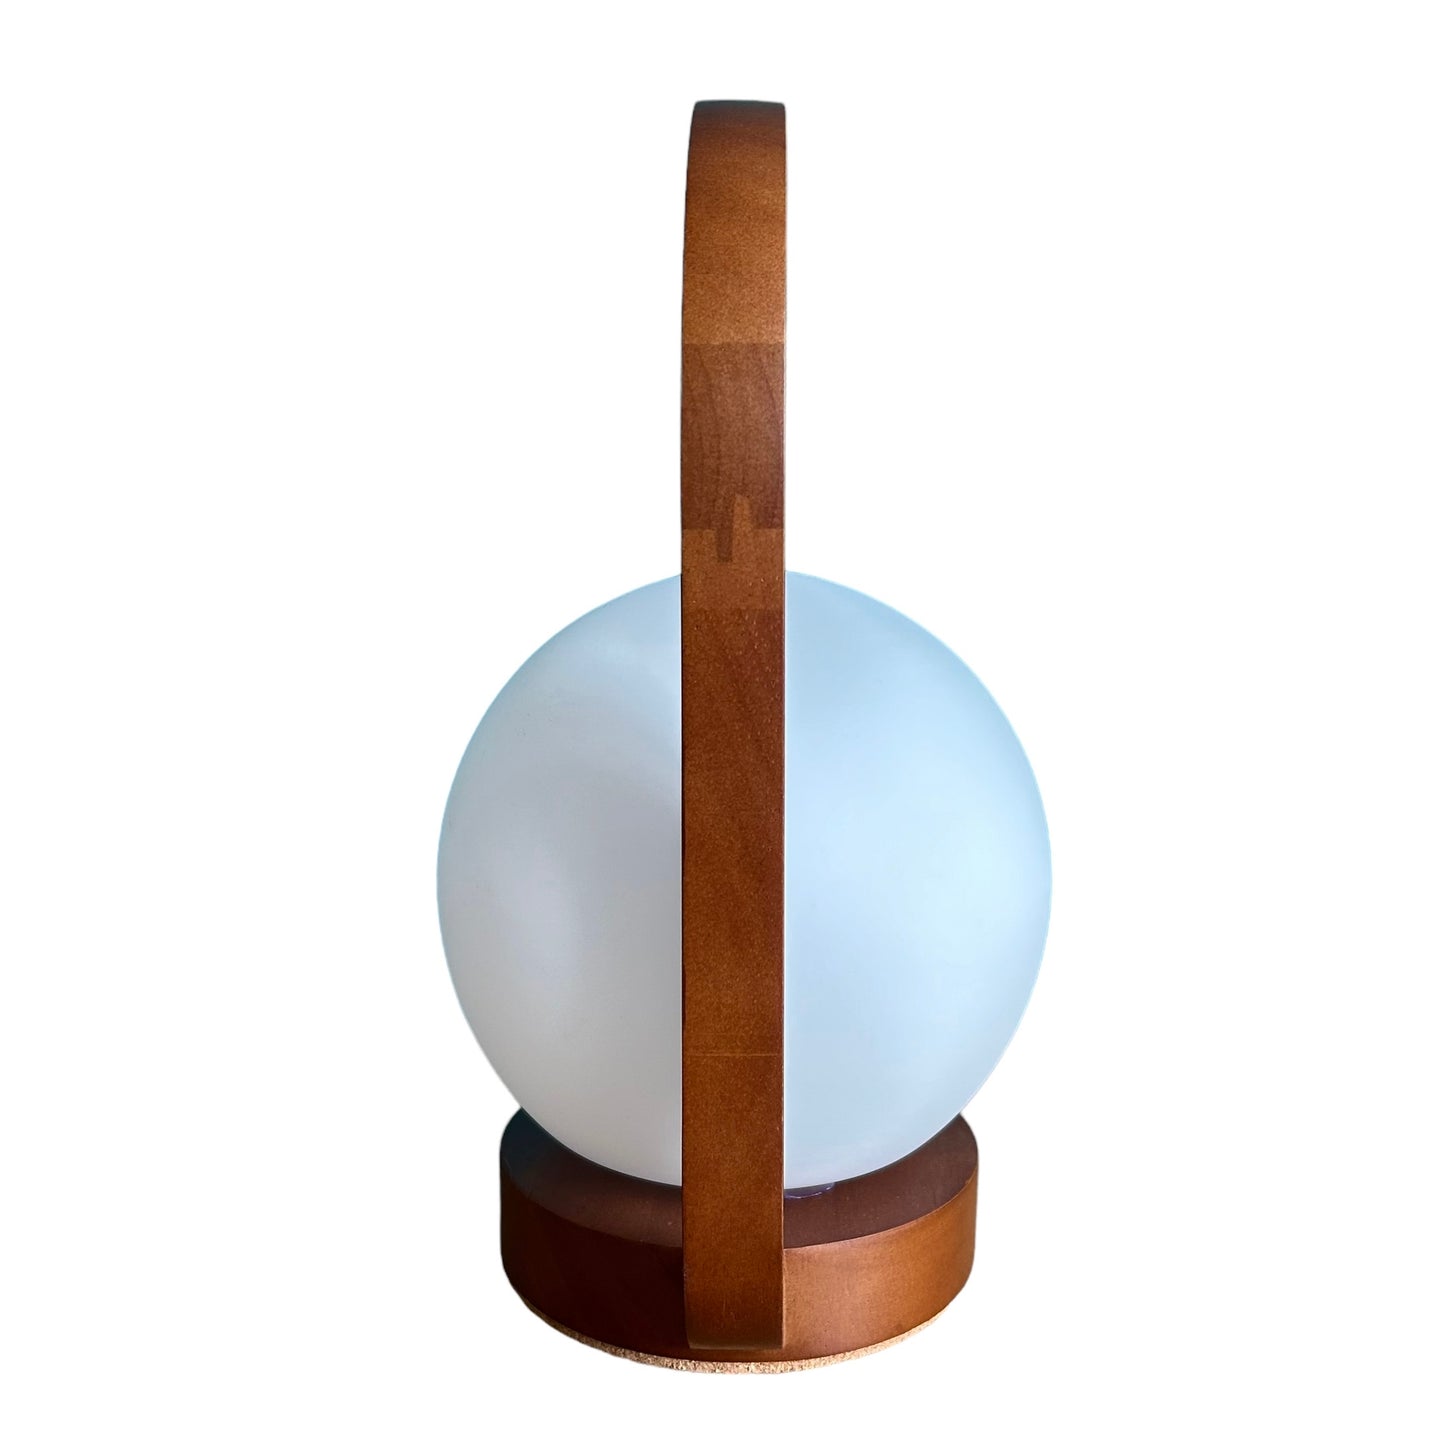 Rechargable touch lantern - teak style wood lamp